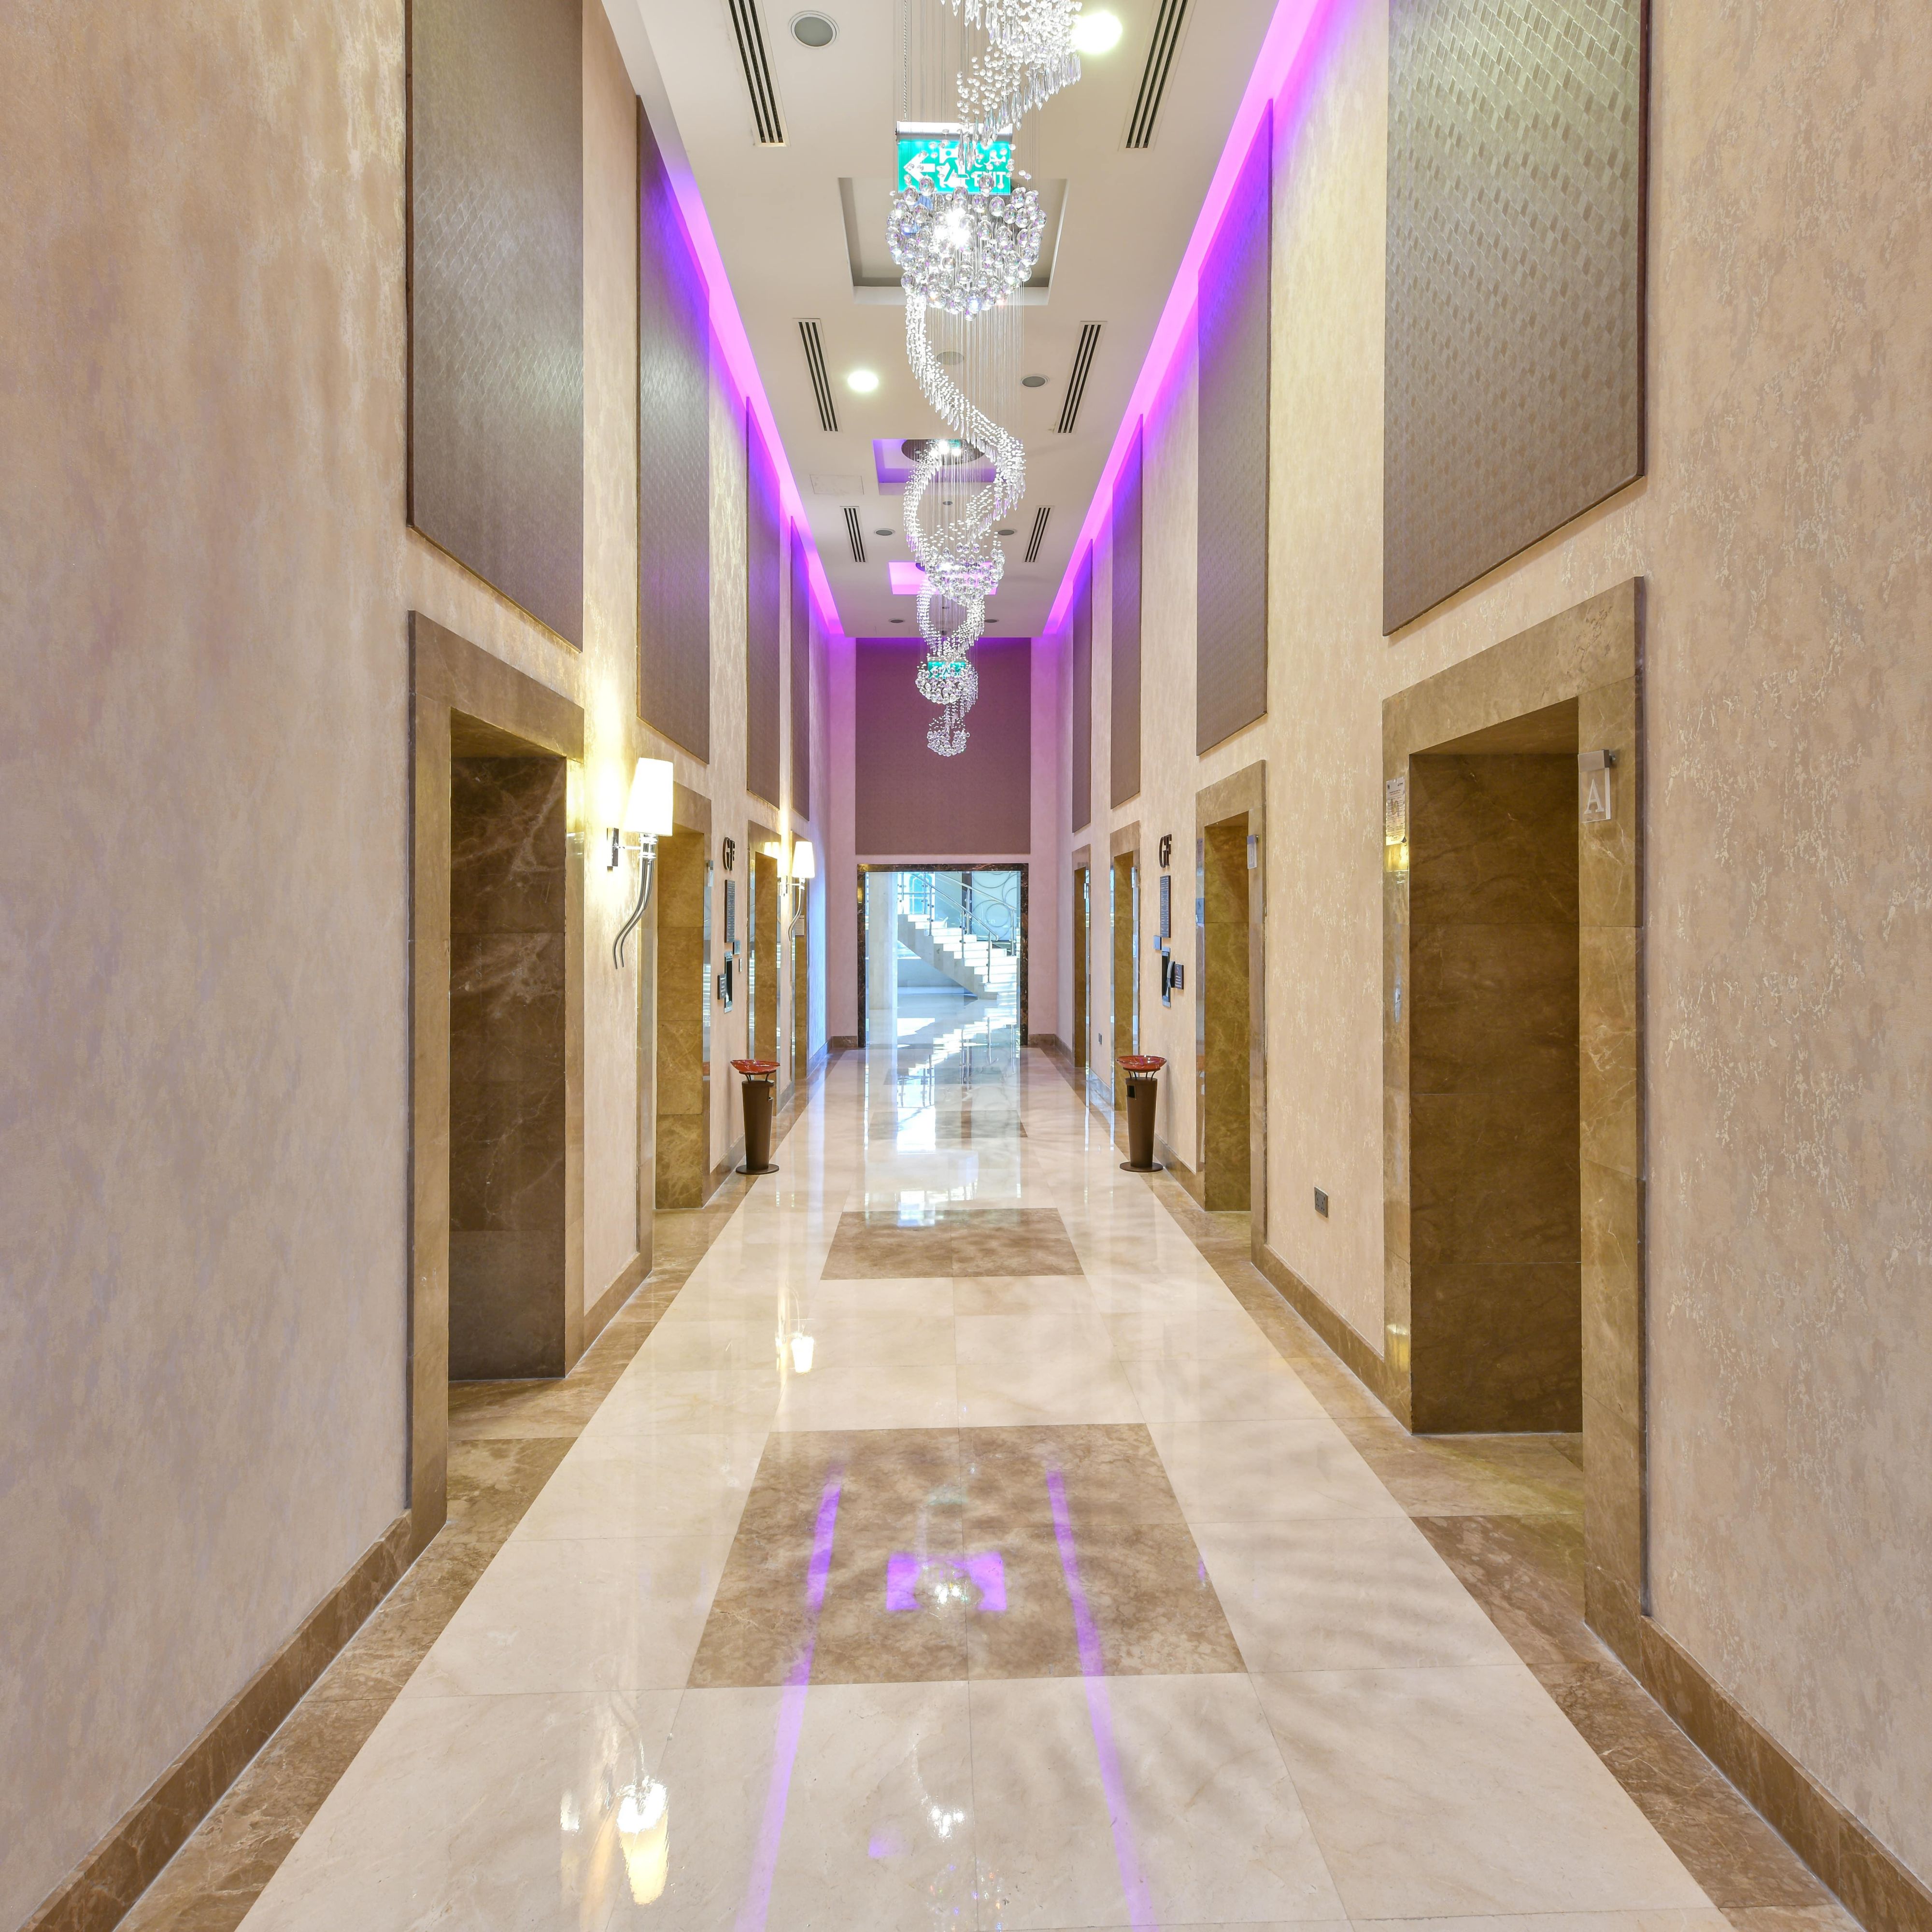 Hotel Hallway at the lobby level